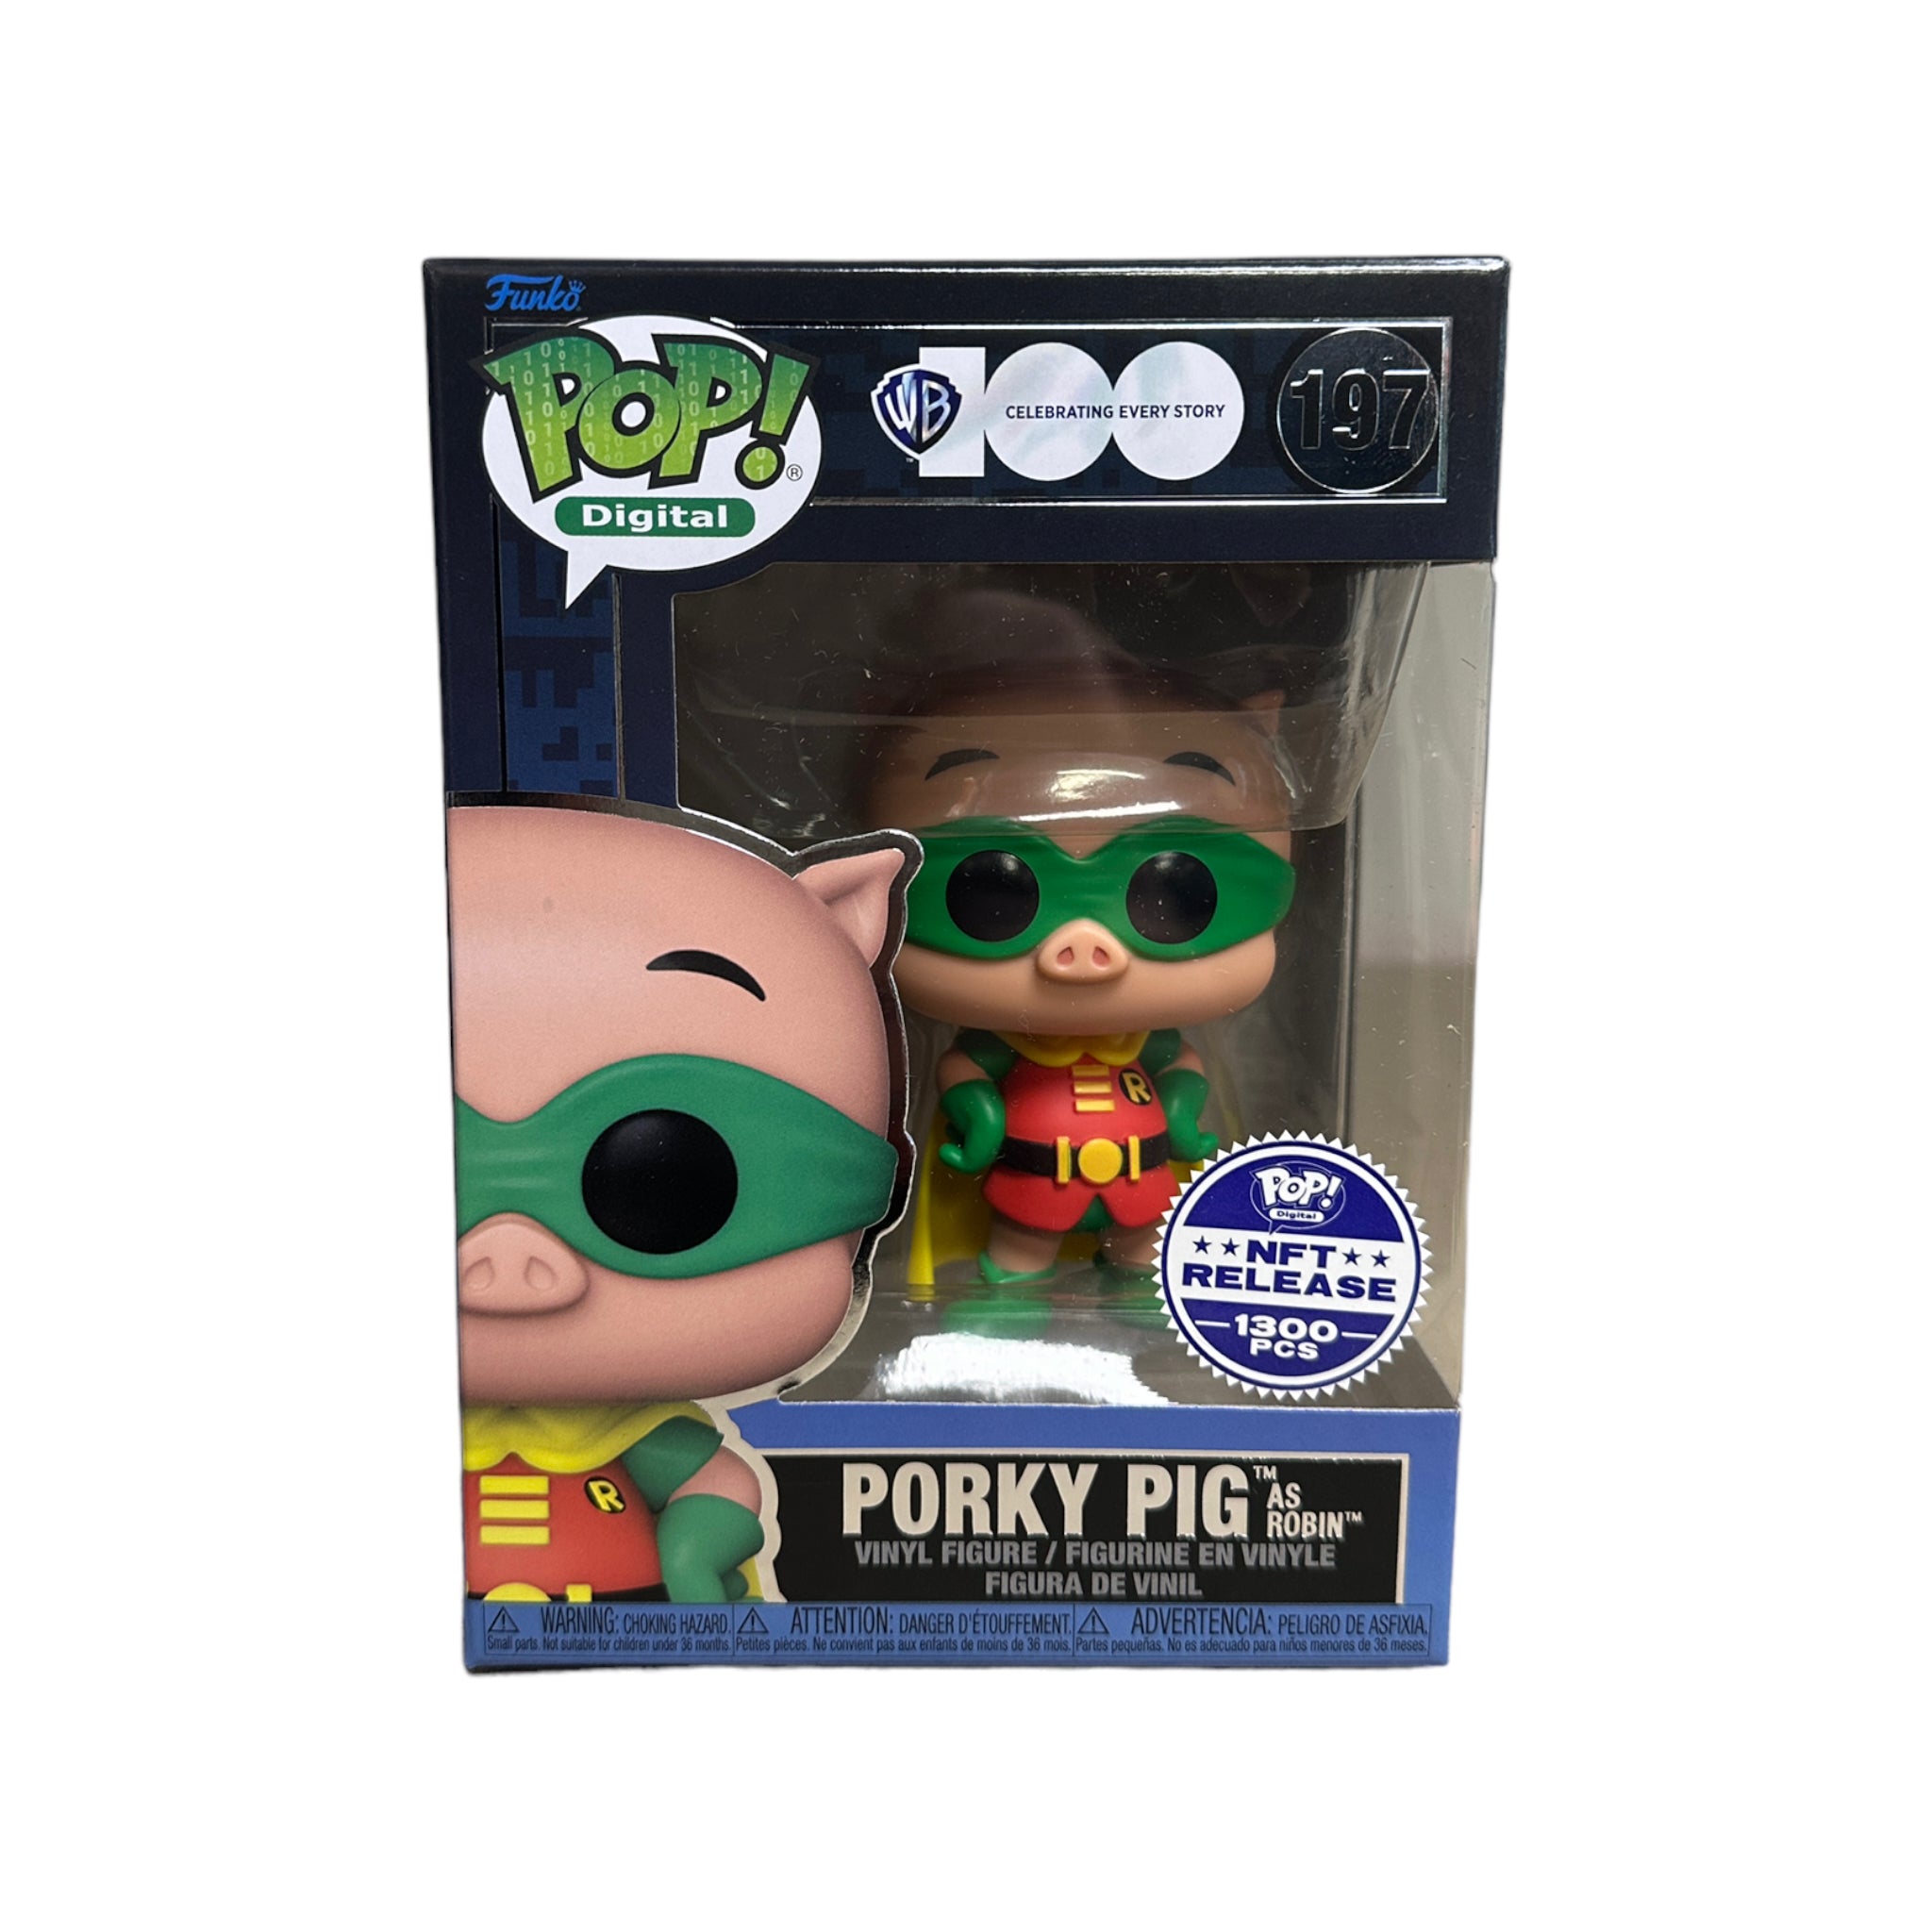 Porky Pig as Robin #197 Funko Pop! - WB 100 - NFT Release Exclusive LE1300 Pcs - Condition 9.5/10